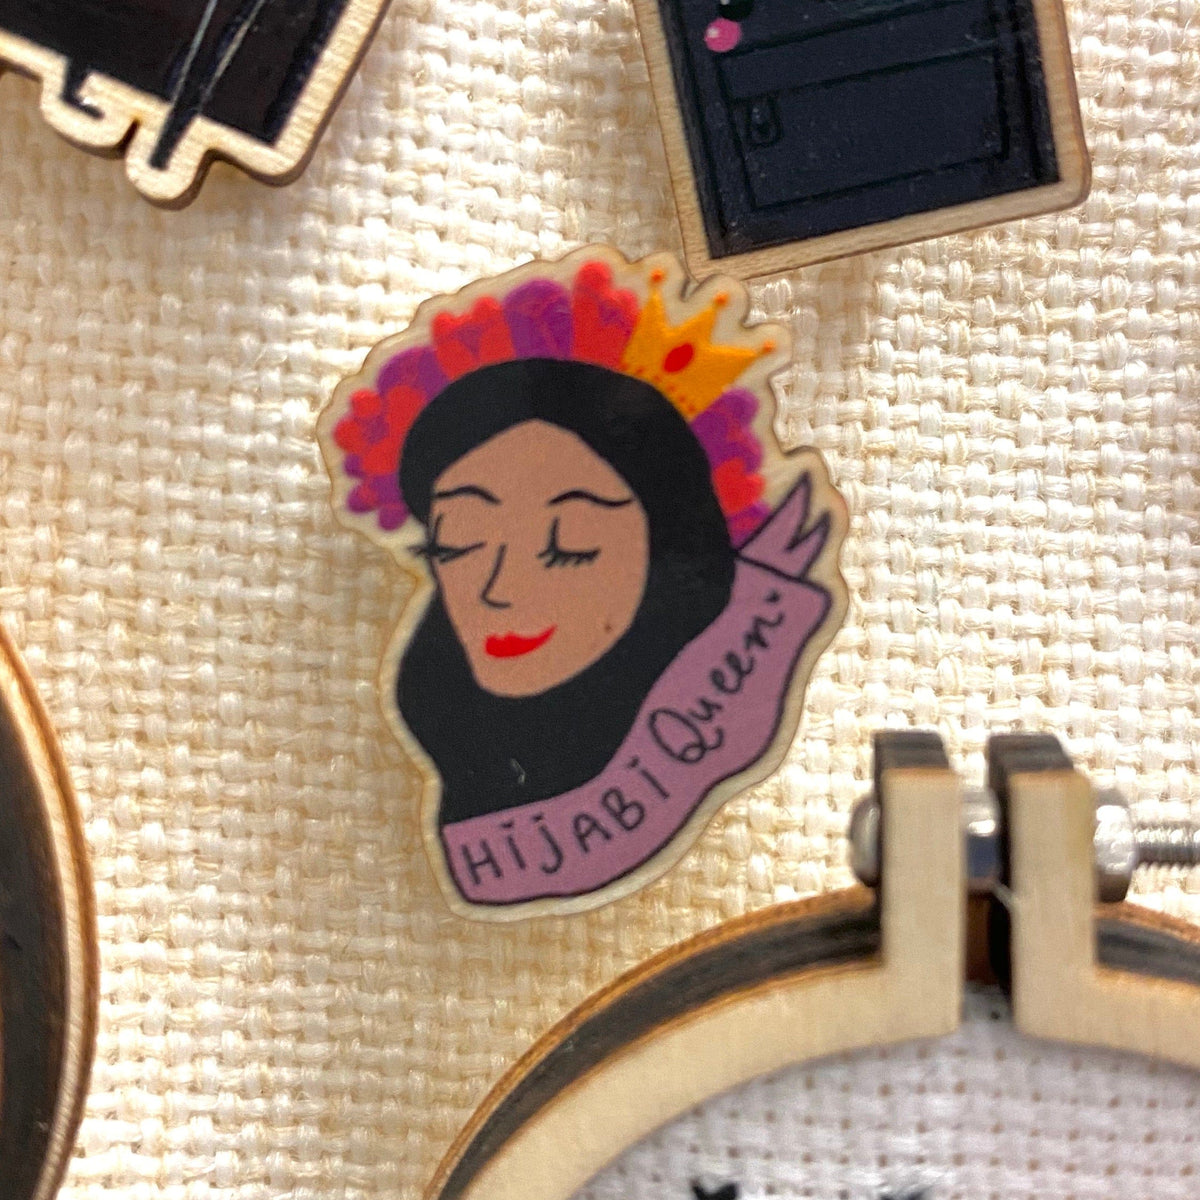 Nytastic Hijabi Queen Badge